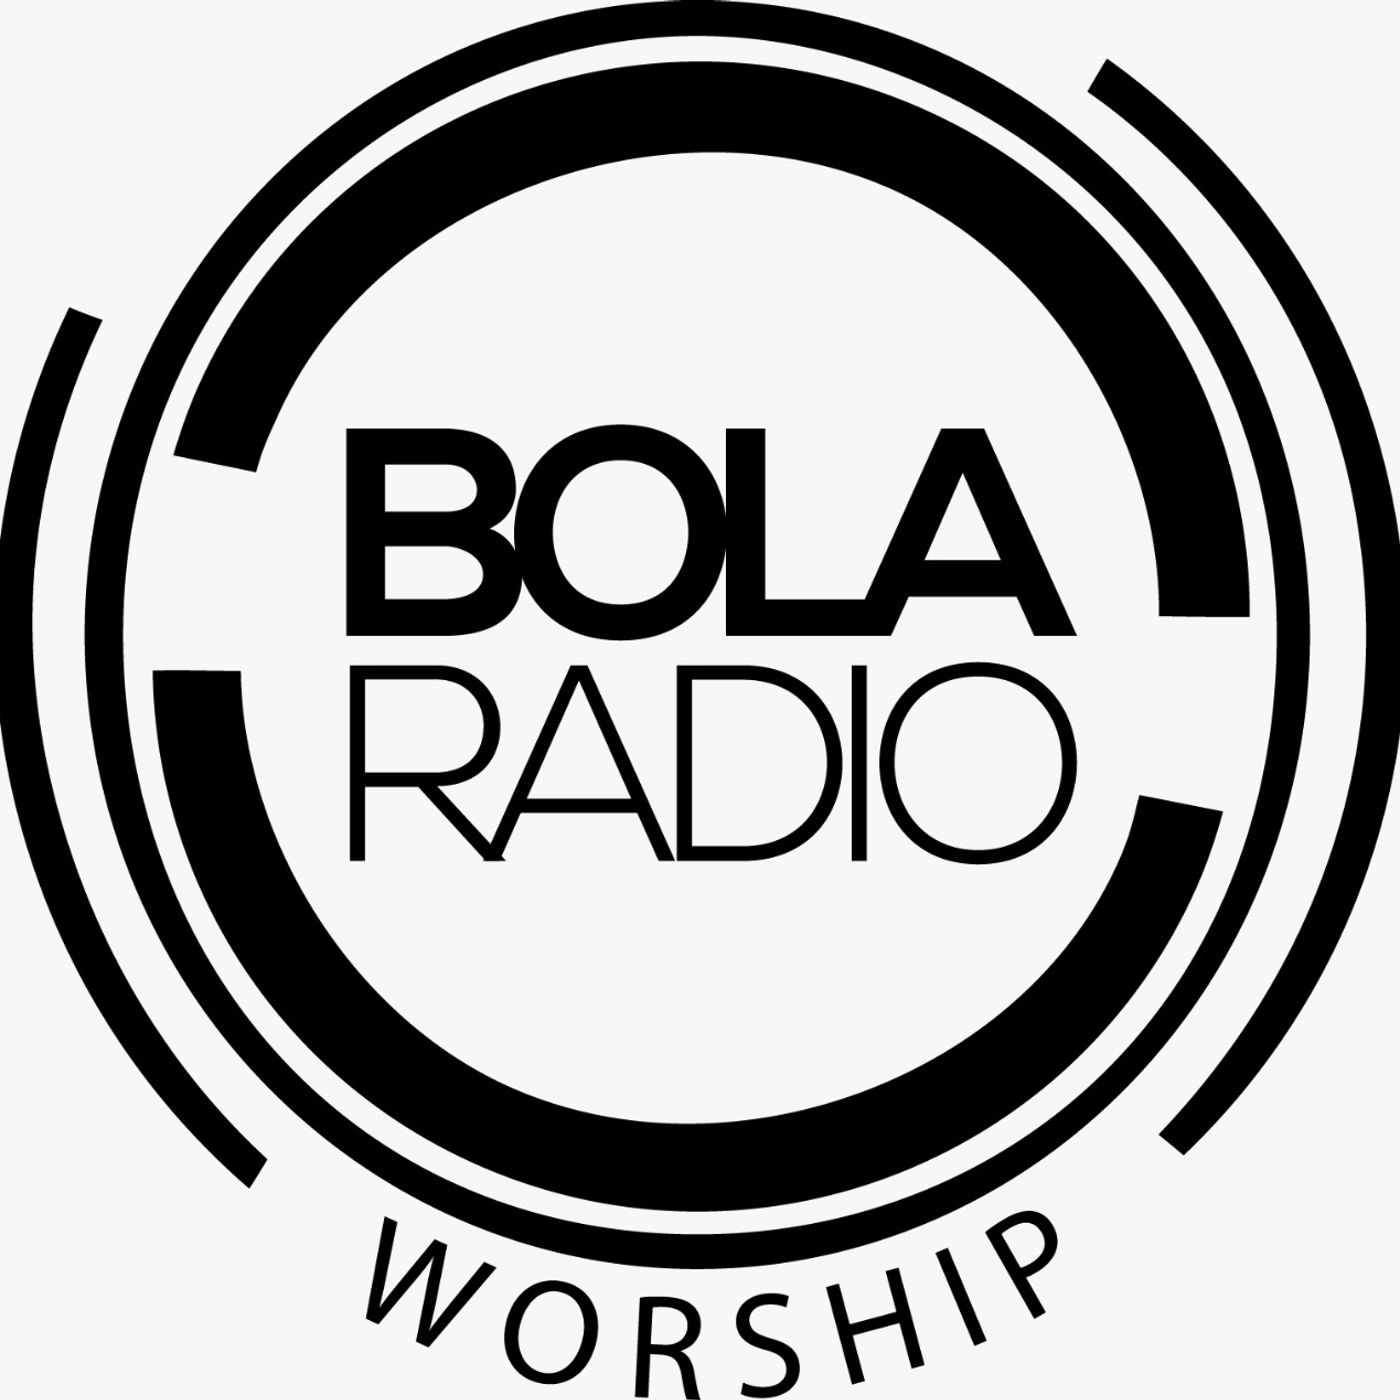 Bola Rádio Worship